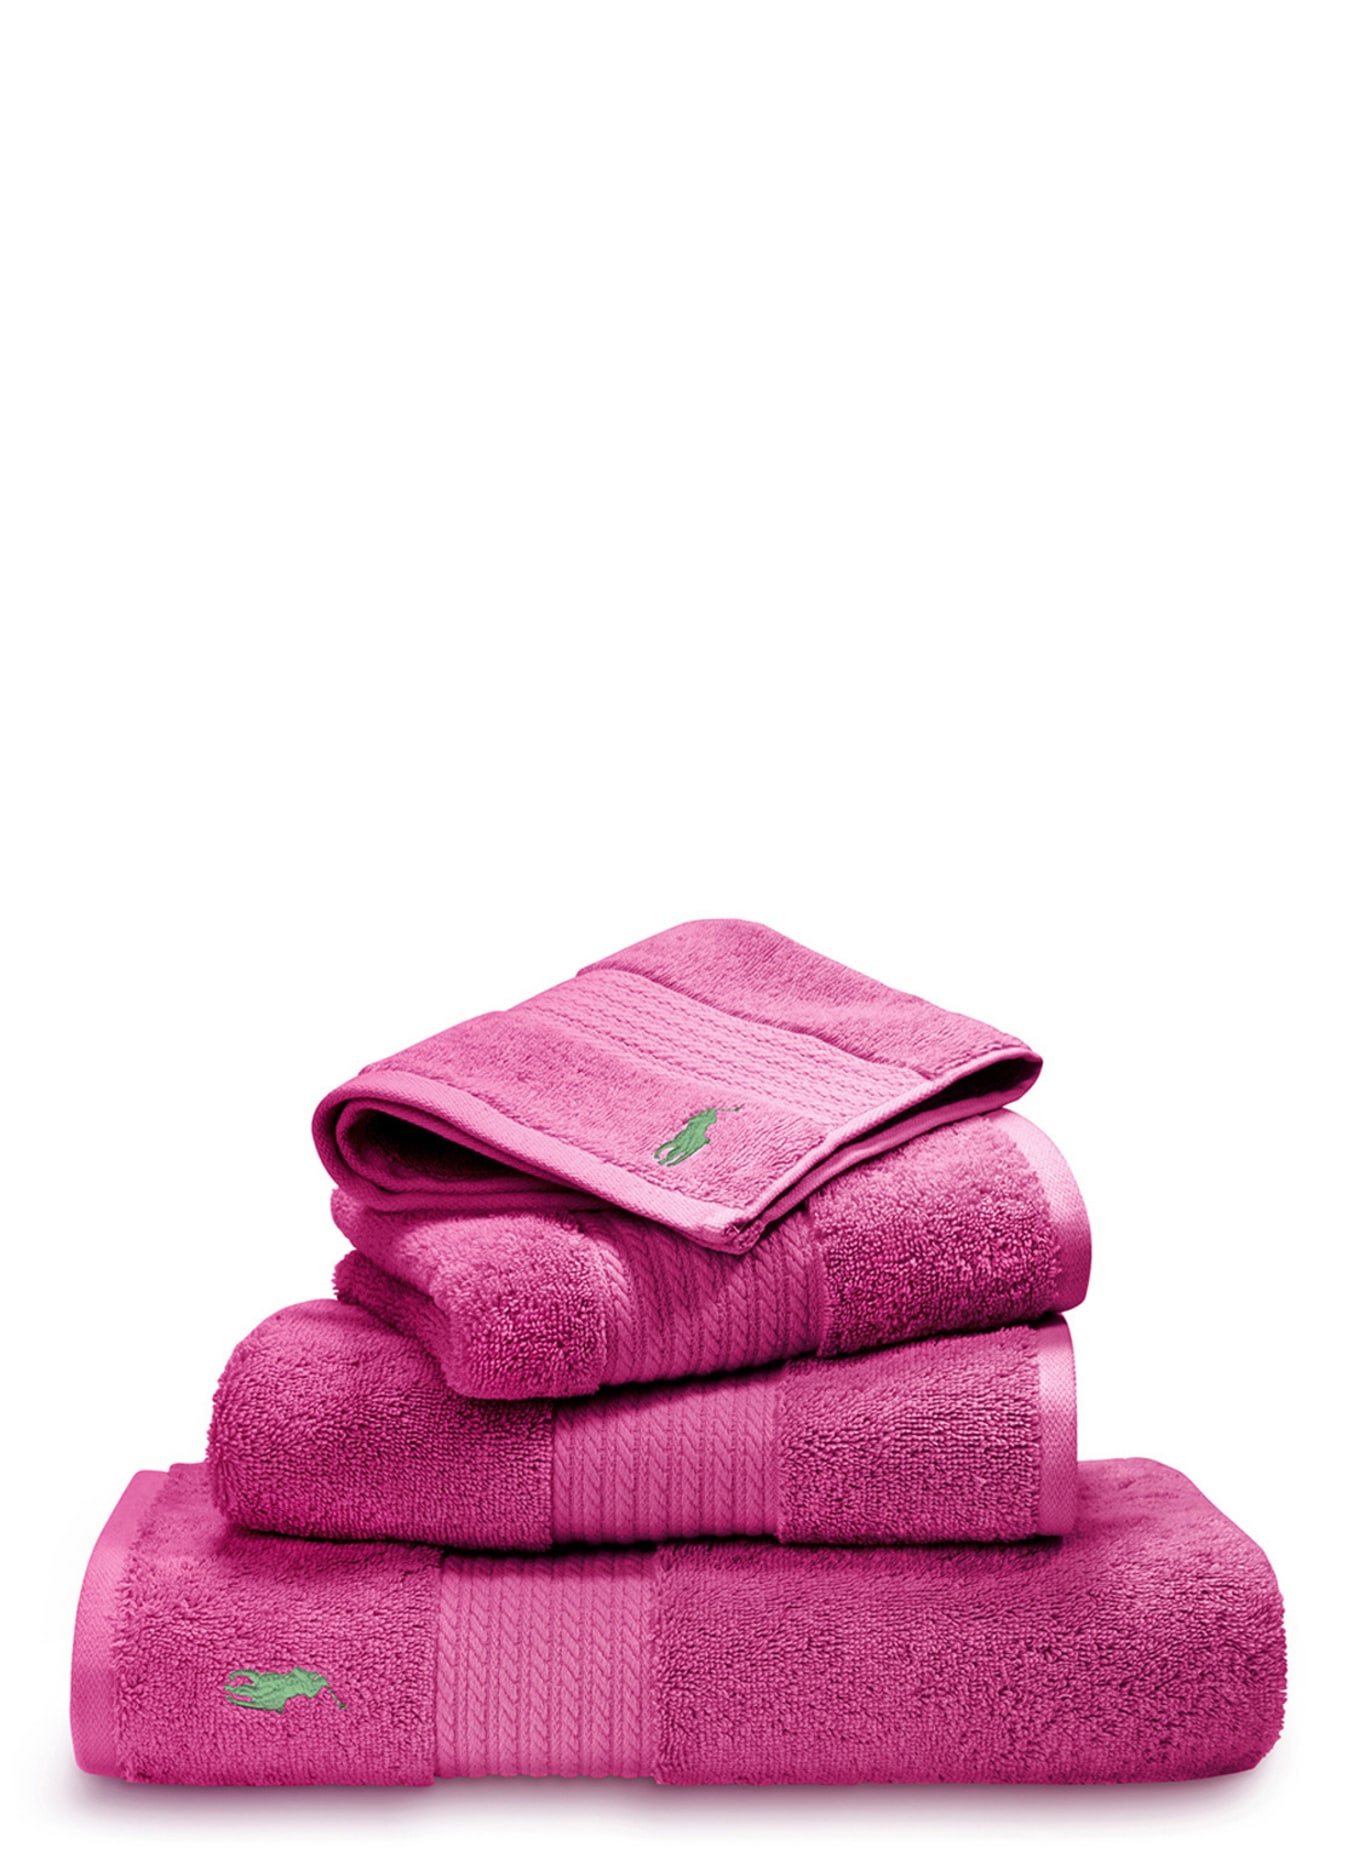 RALPH LAUREN HOME Handtuch POLO PLAYER, Farbe: ROSA (Bild 11)